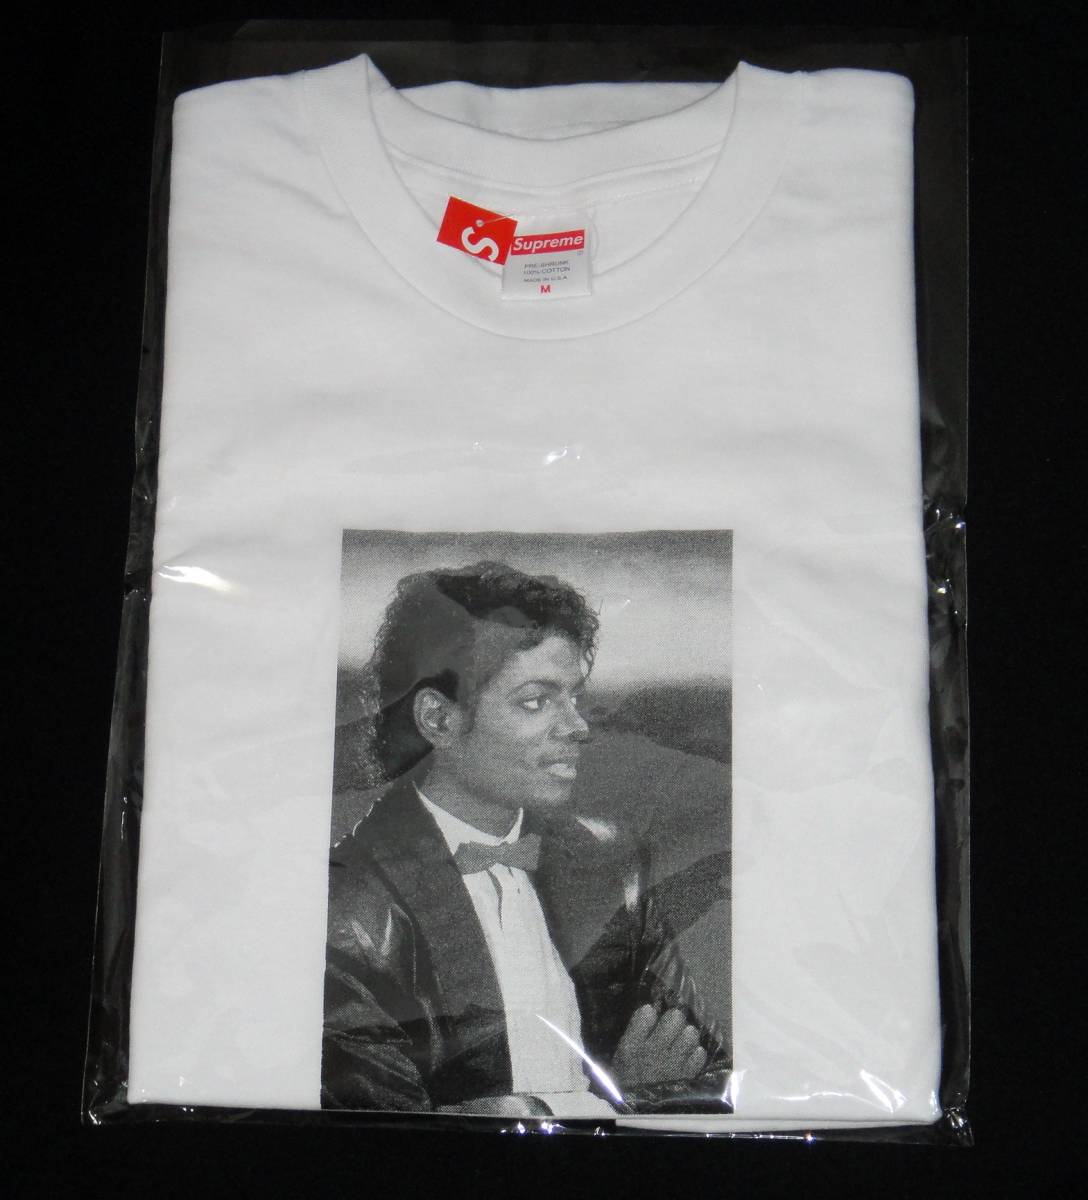 Supreme Michael Jackson Tee White Medium 国内正規品 新品未使用 17SS シュプリーム マイケル ジャクソン  Tシャツ ホワイト 白 サイズM